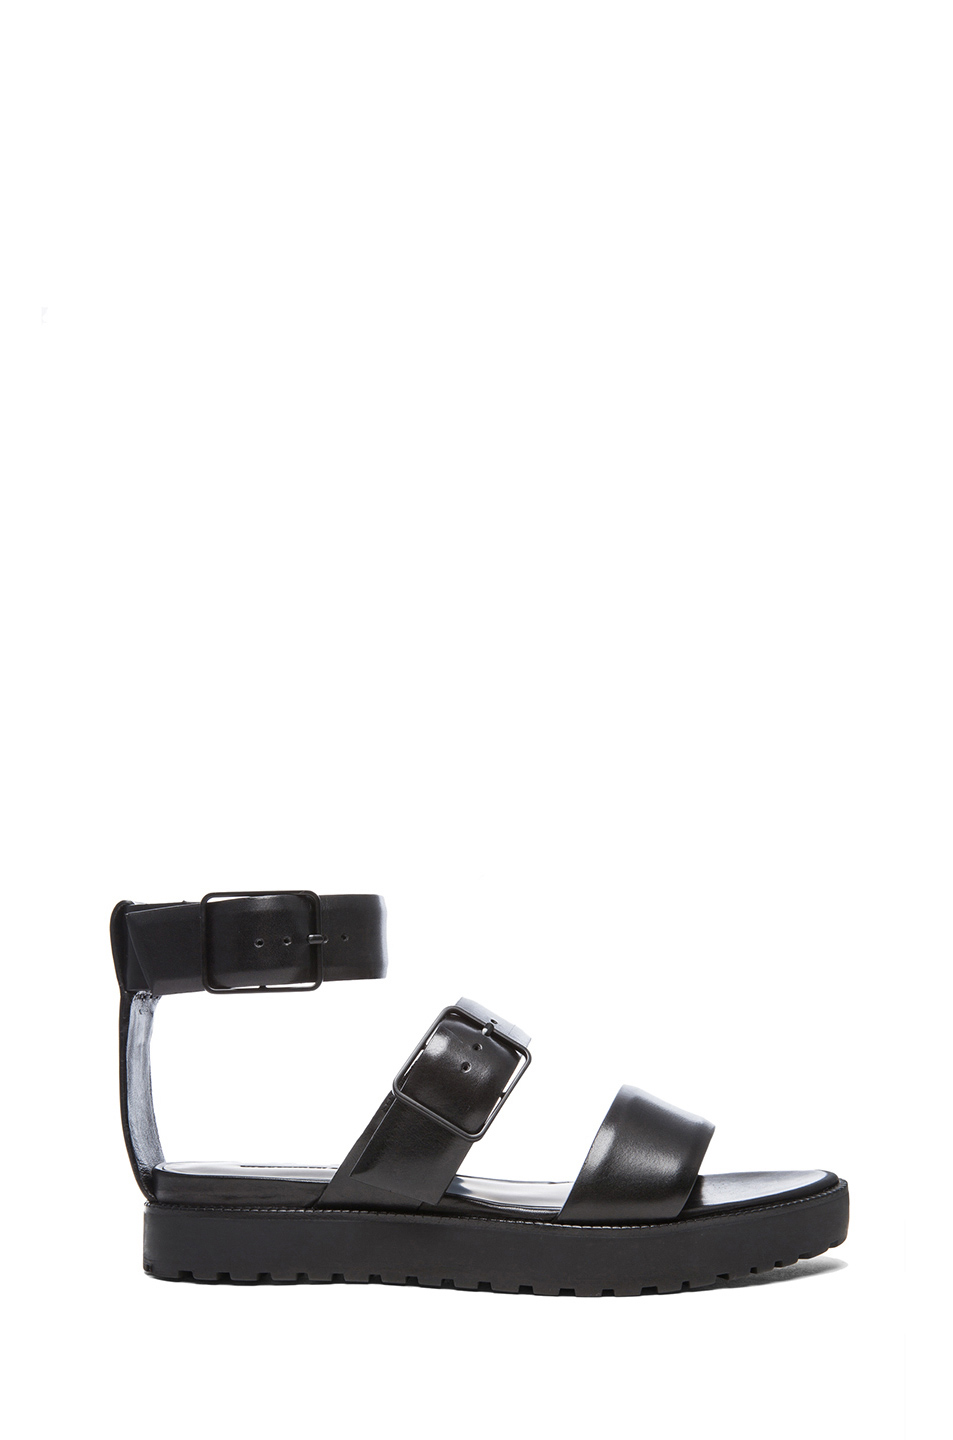 Alexander Wang|Kira Ankle Strap Calfskin Sandals in Black [1]